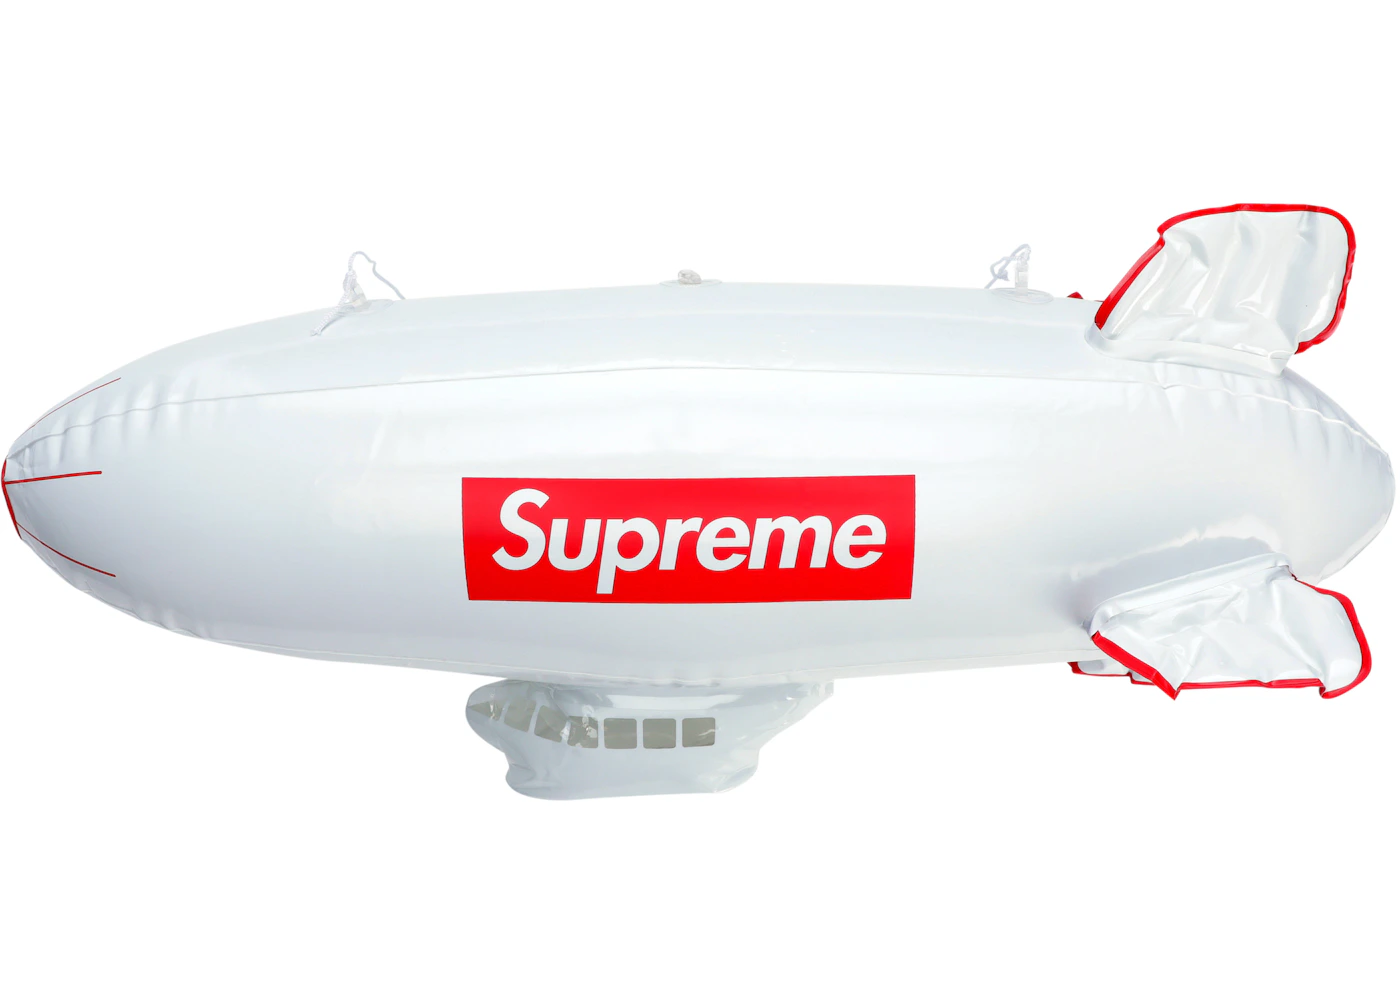 Supreme Inflatable Blimp White - FW17